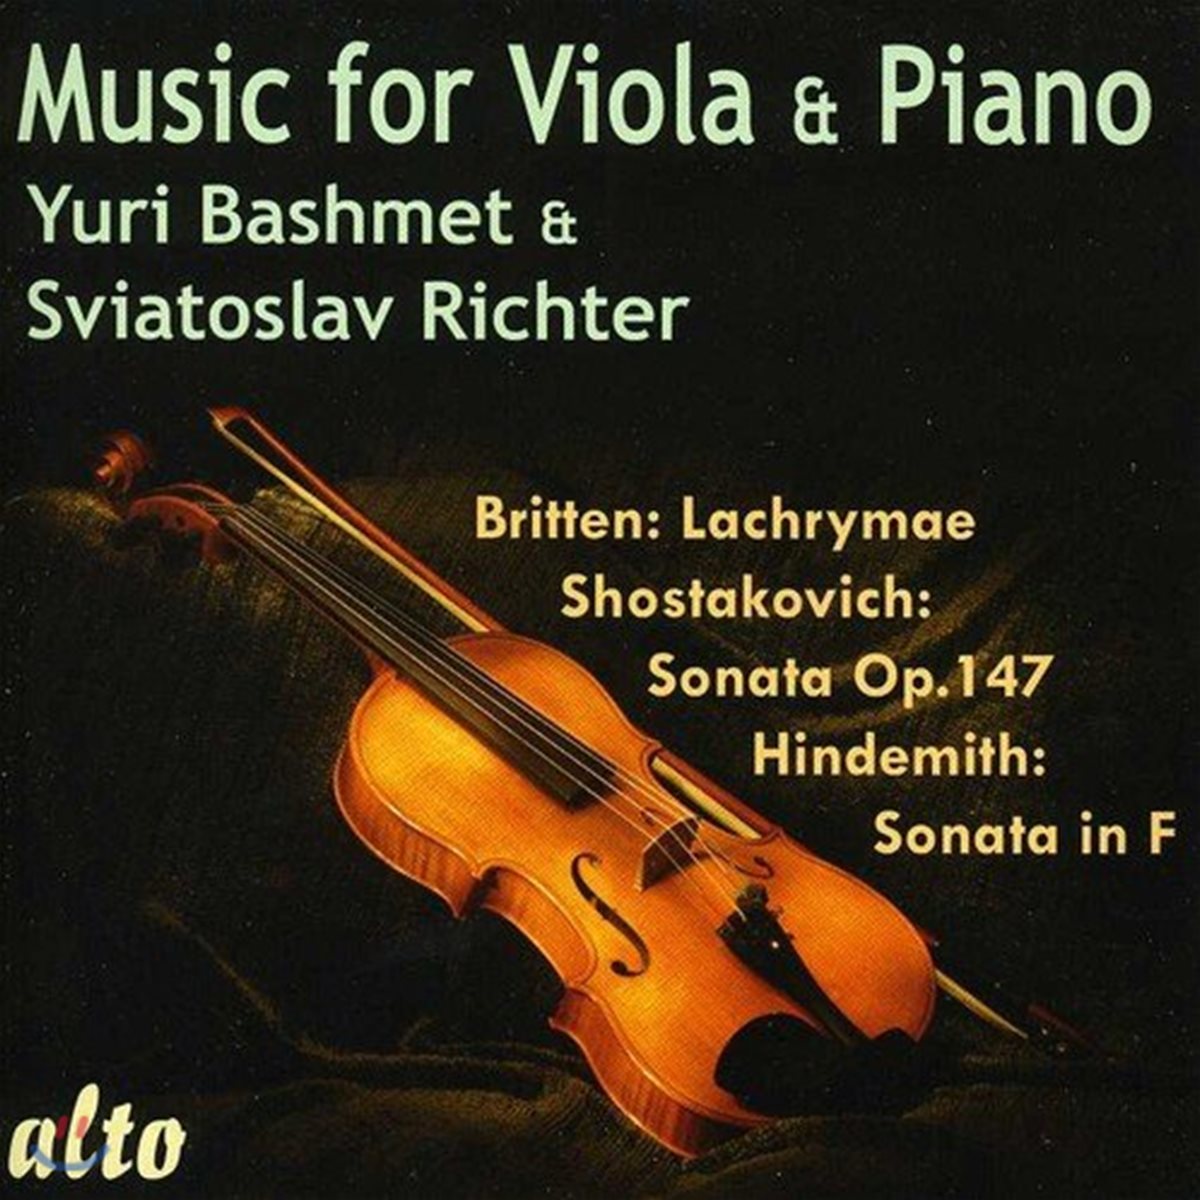 Yuri Bashmet / Sviatoslav Richter 유리 바쉬메트 & 스비아토슬라브 리히터 - 브리튼 / 쇼스타코비치 / 힌데미트: 비올라와 피아노를 위한 음악 (Britten / Shostakovich / Hindemith: Music for Viola & Piano)